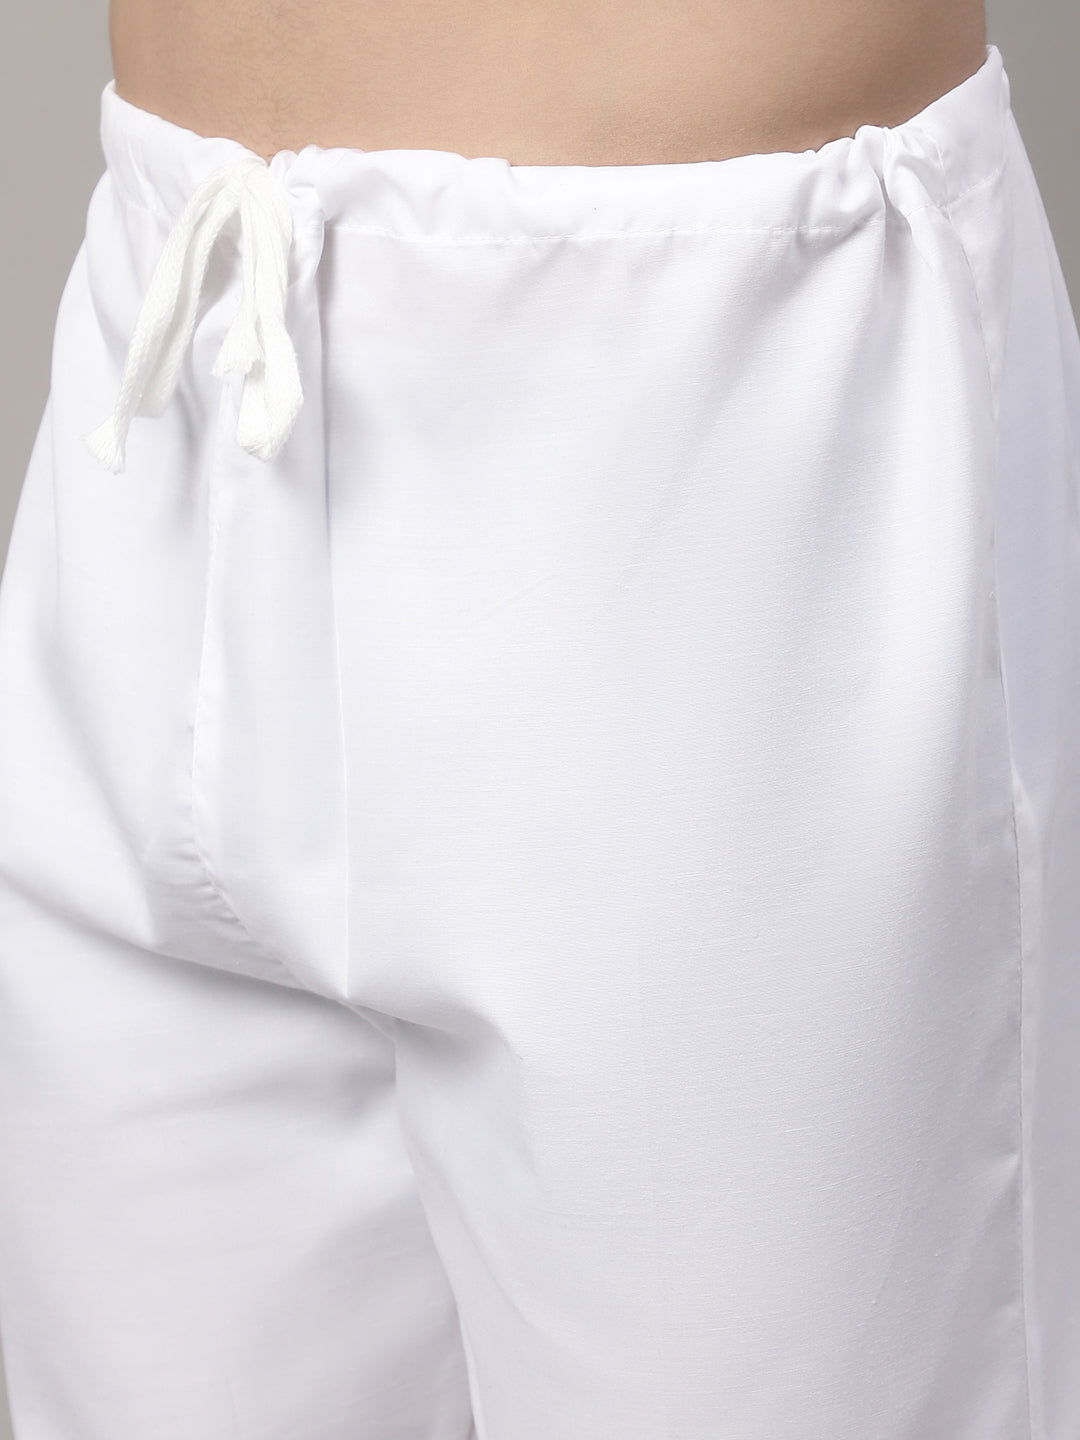 Men off-White Solid Kurta Pyjama with  Golden Woven Design Nehru Jacket